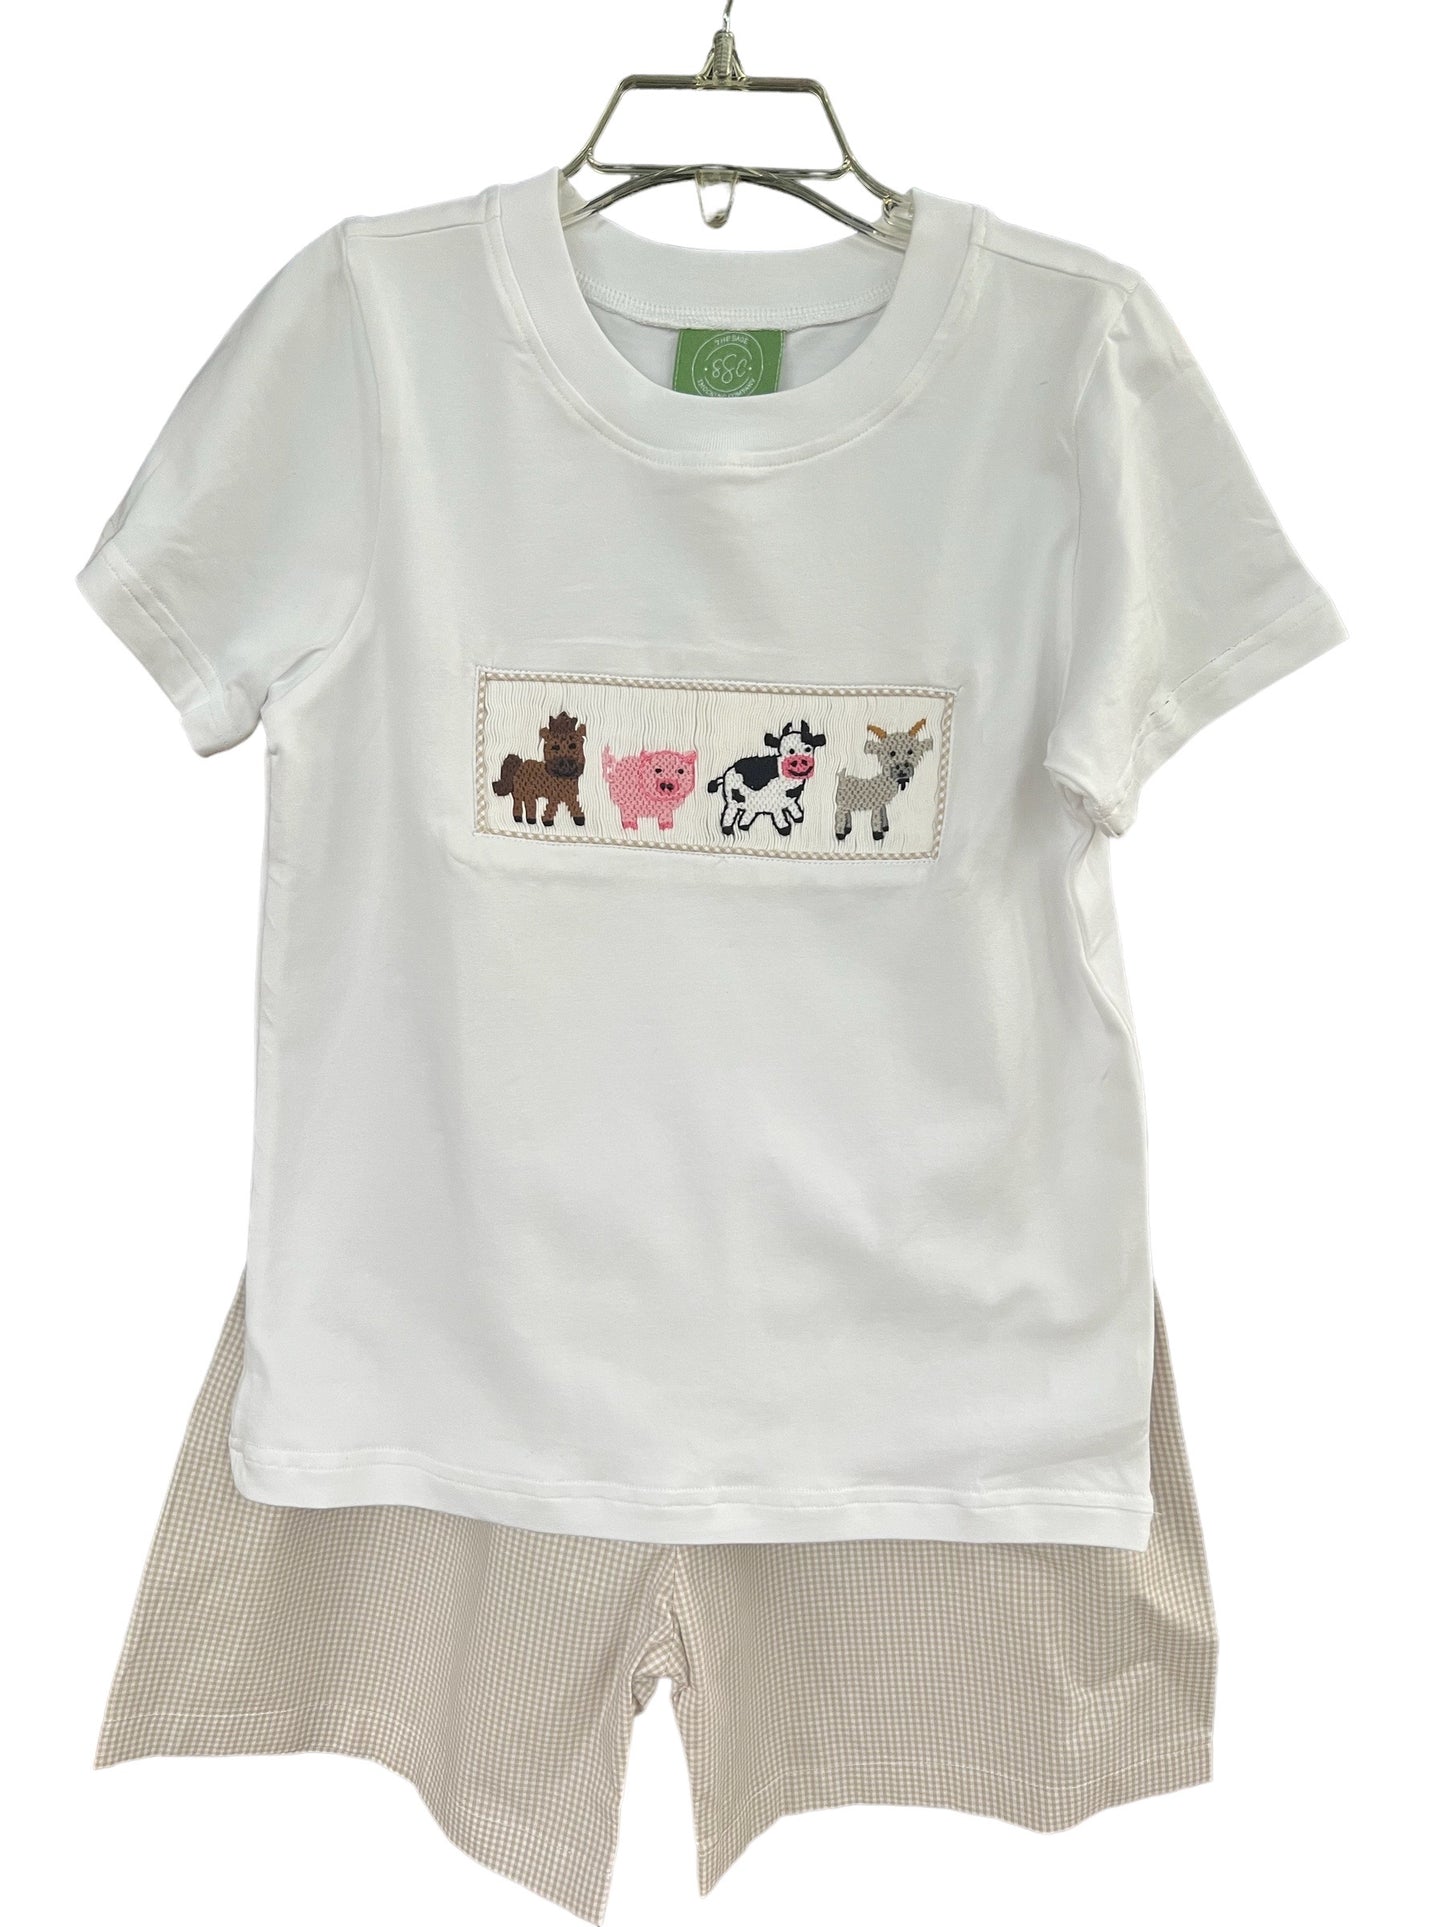 Smocked Farm Animals Horse Pig Cow Goat Boy's Short Sleeve white shirt with tan gingham shorts elastic waist 